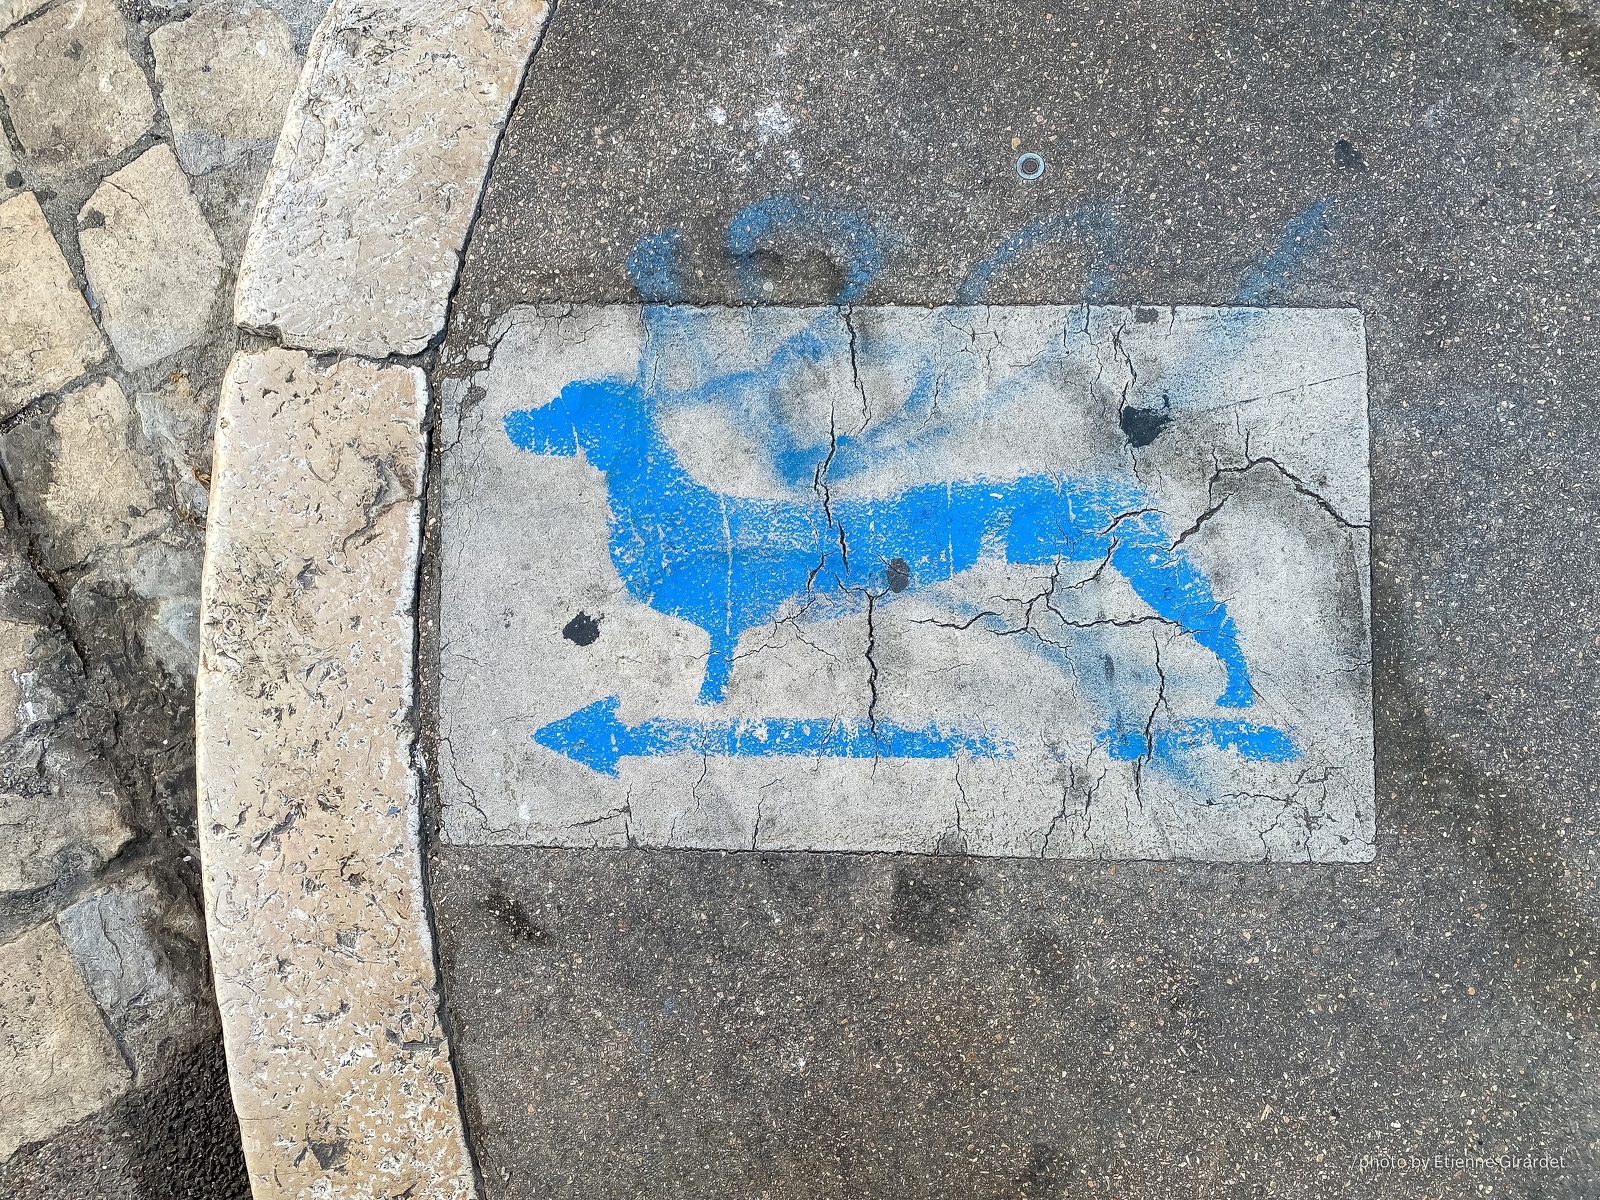 202110_14_IMG_9449-stencil-blue-dog-street-by-E-Girardet.jpg